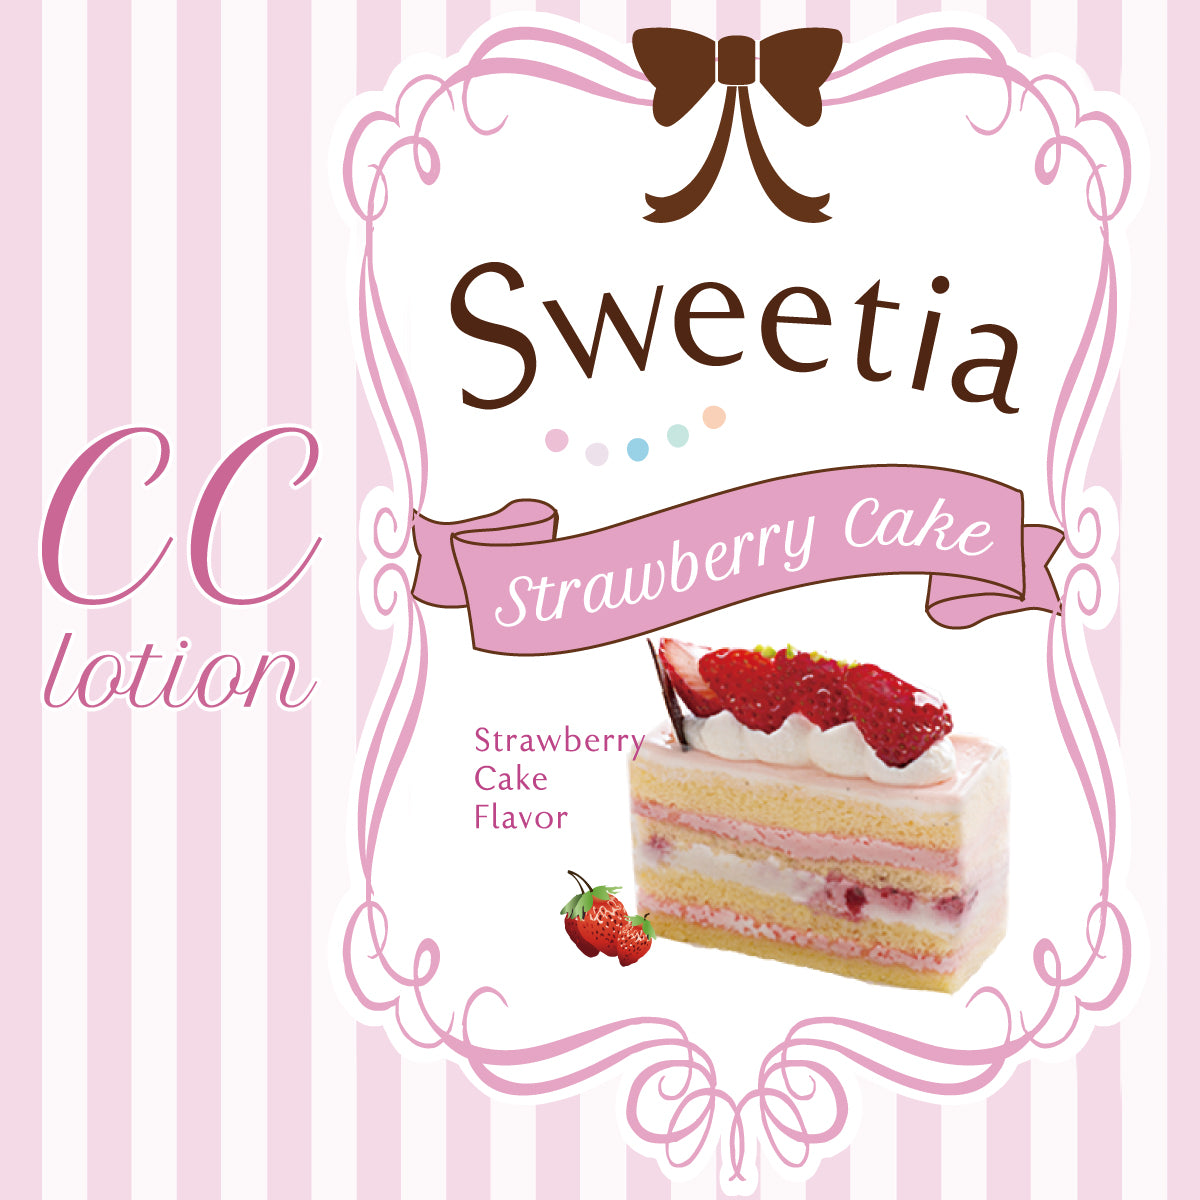 CC lotion Sweetia 180ml (士多啤梨蛋糕味)